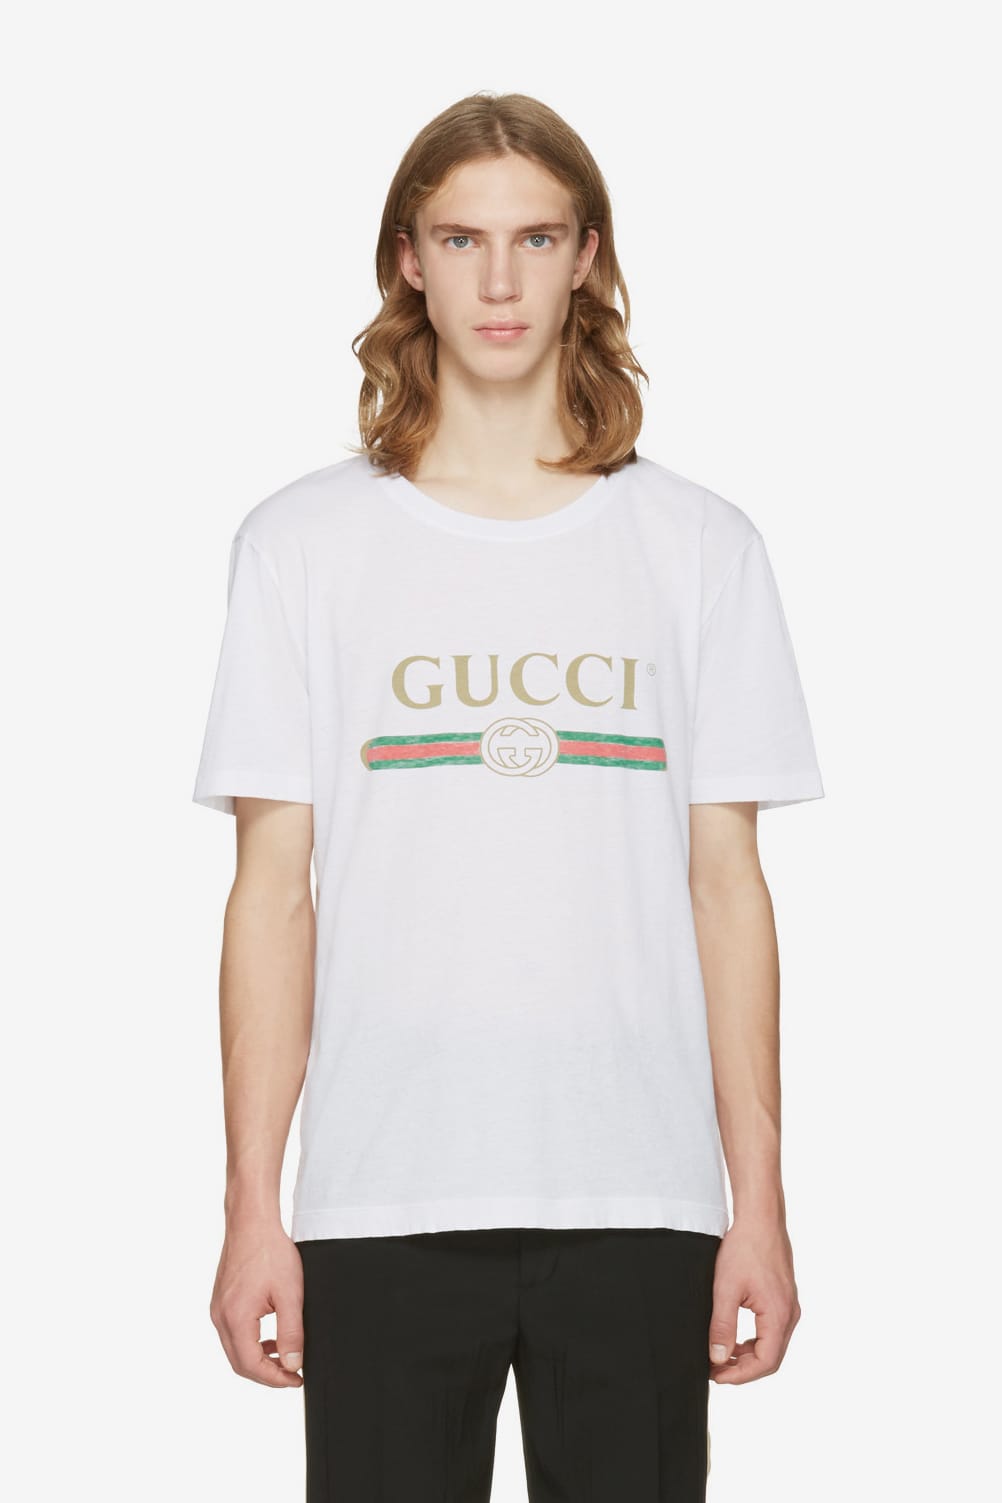 Gucci Printed Logo Tee | HYPEBEAST